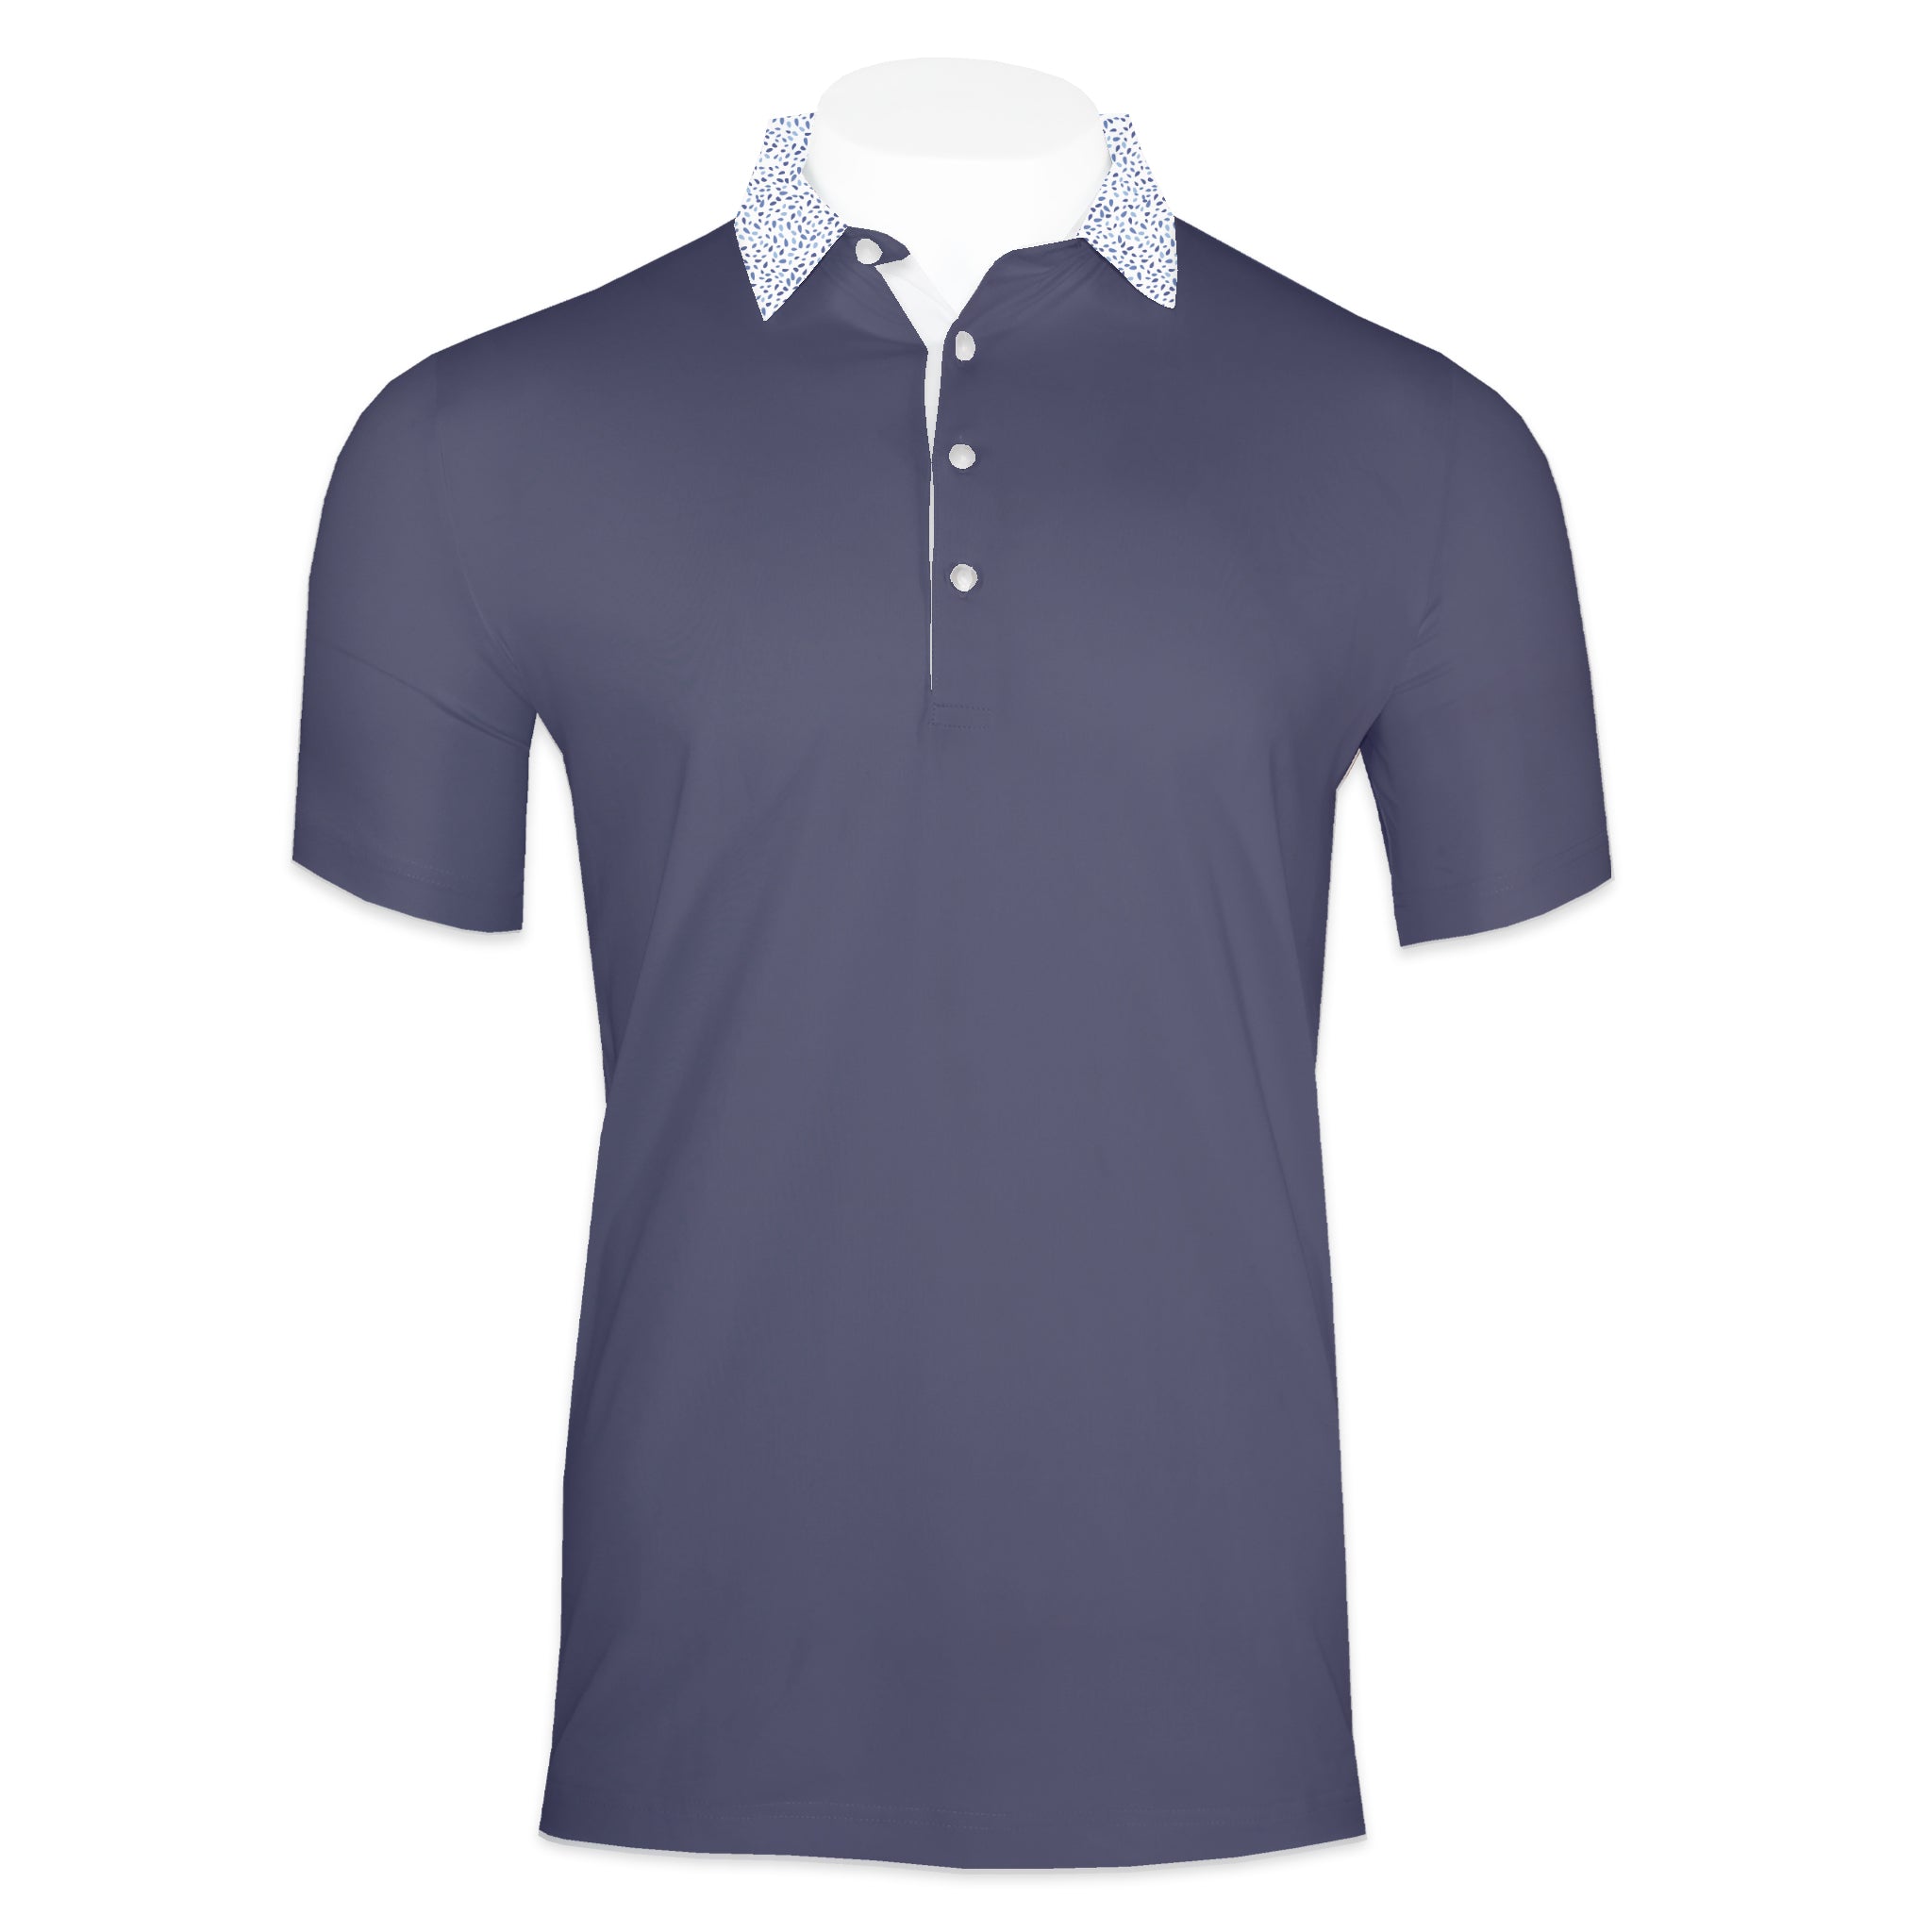 'Santorini' Four Button Golf Shirt